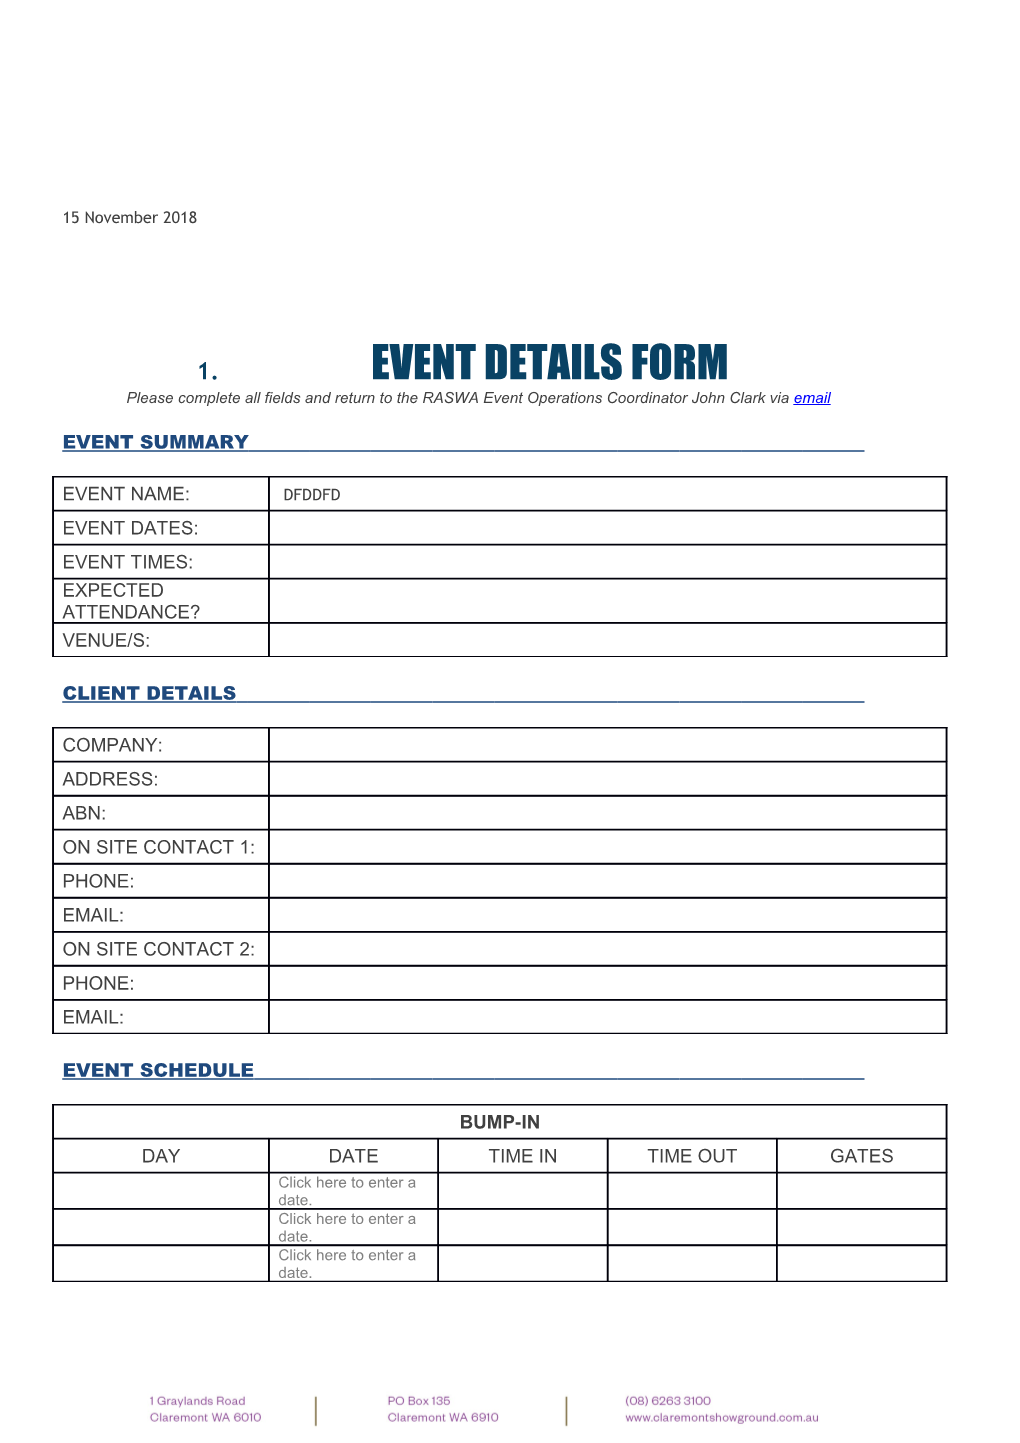 Event Details Form